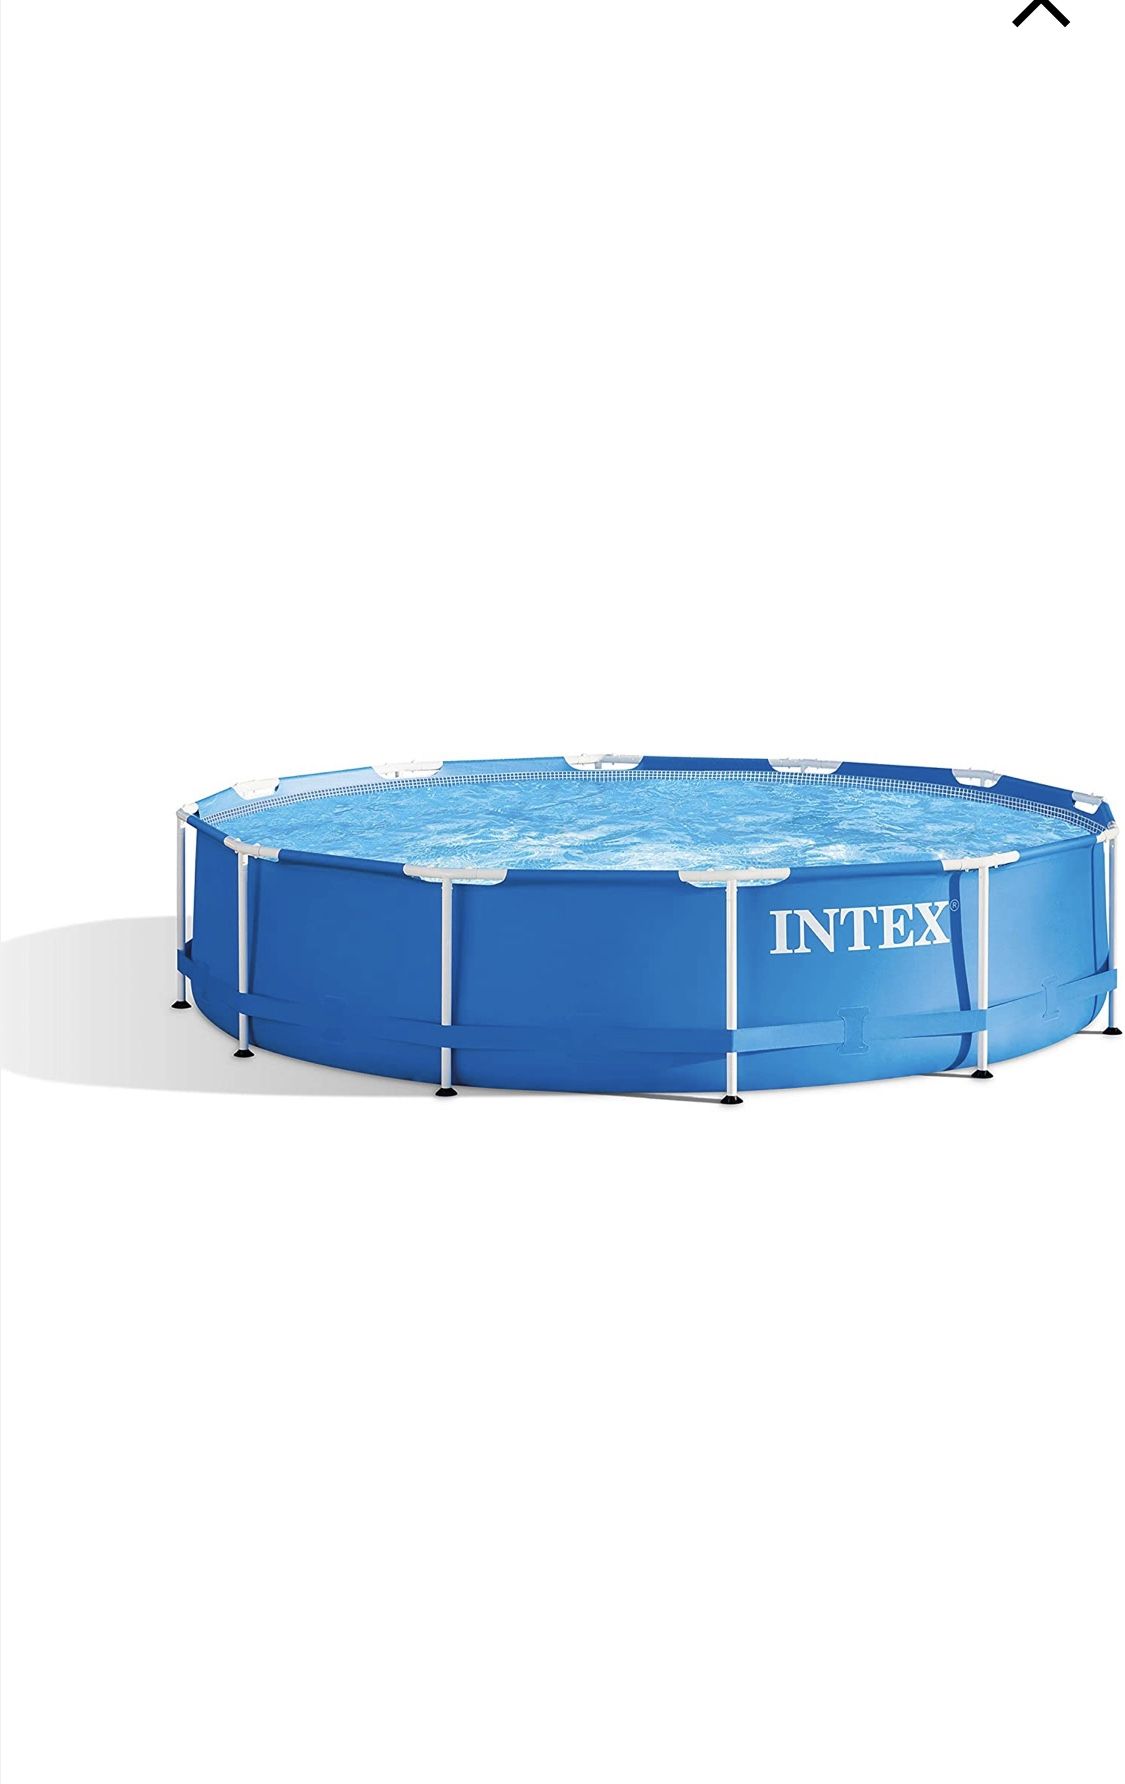 INTEX 12ft x 30in Metal Frame Pool with Cartridge Filter Pump